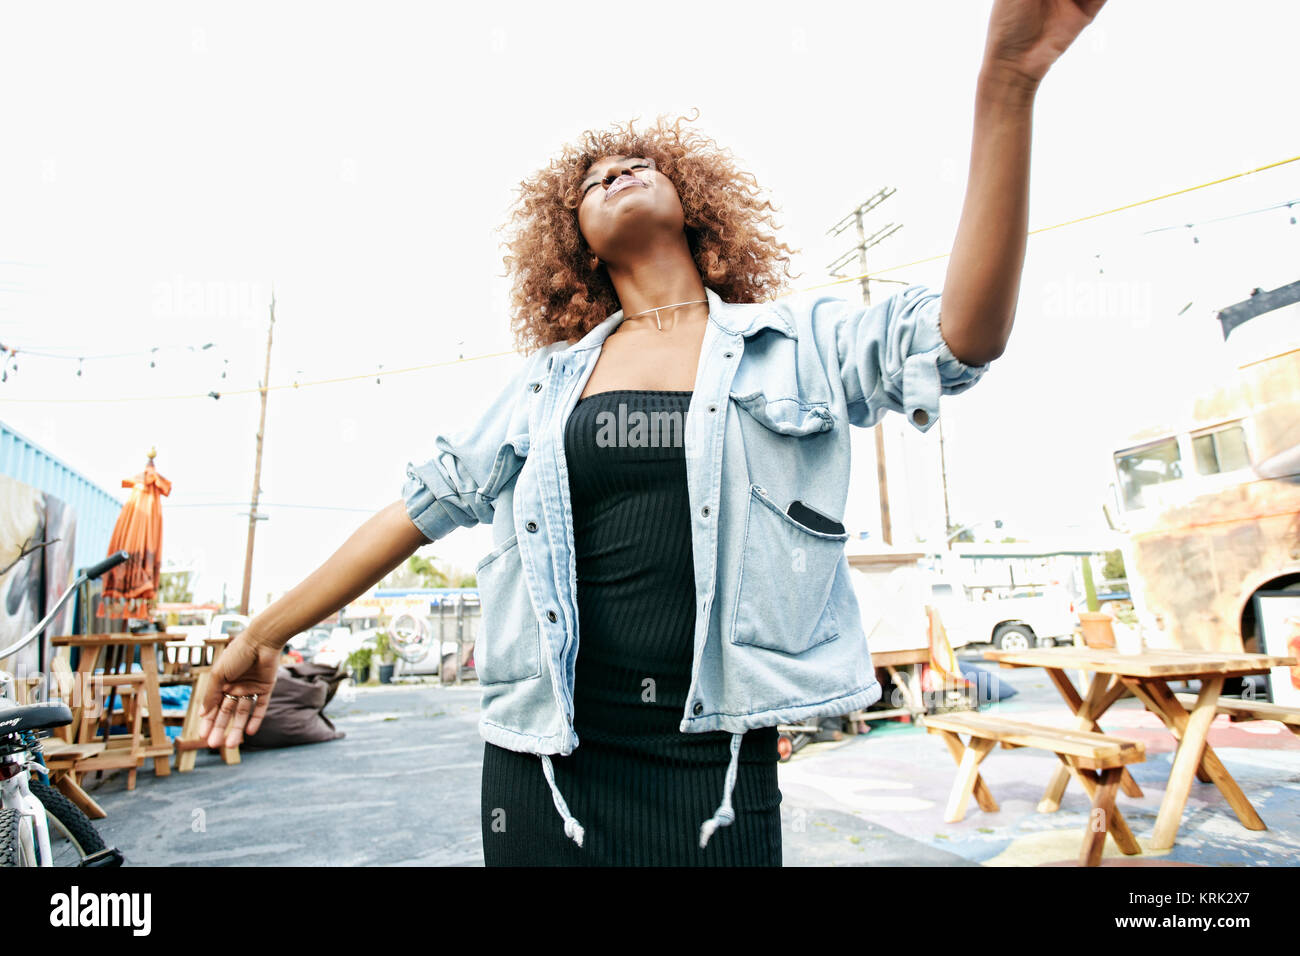 Carefree Black woman dancing outdoors Stock Photo